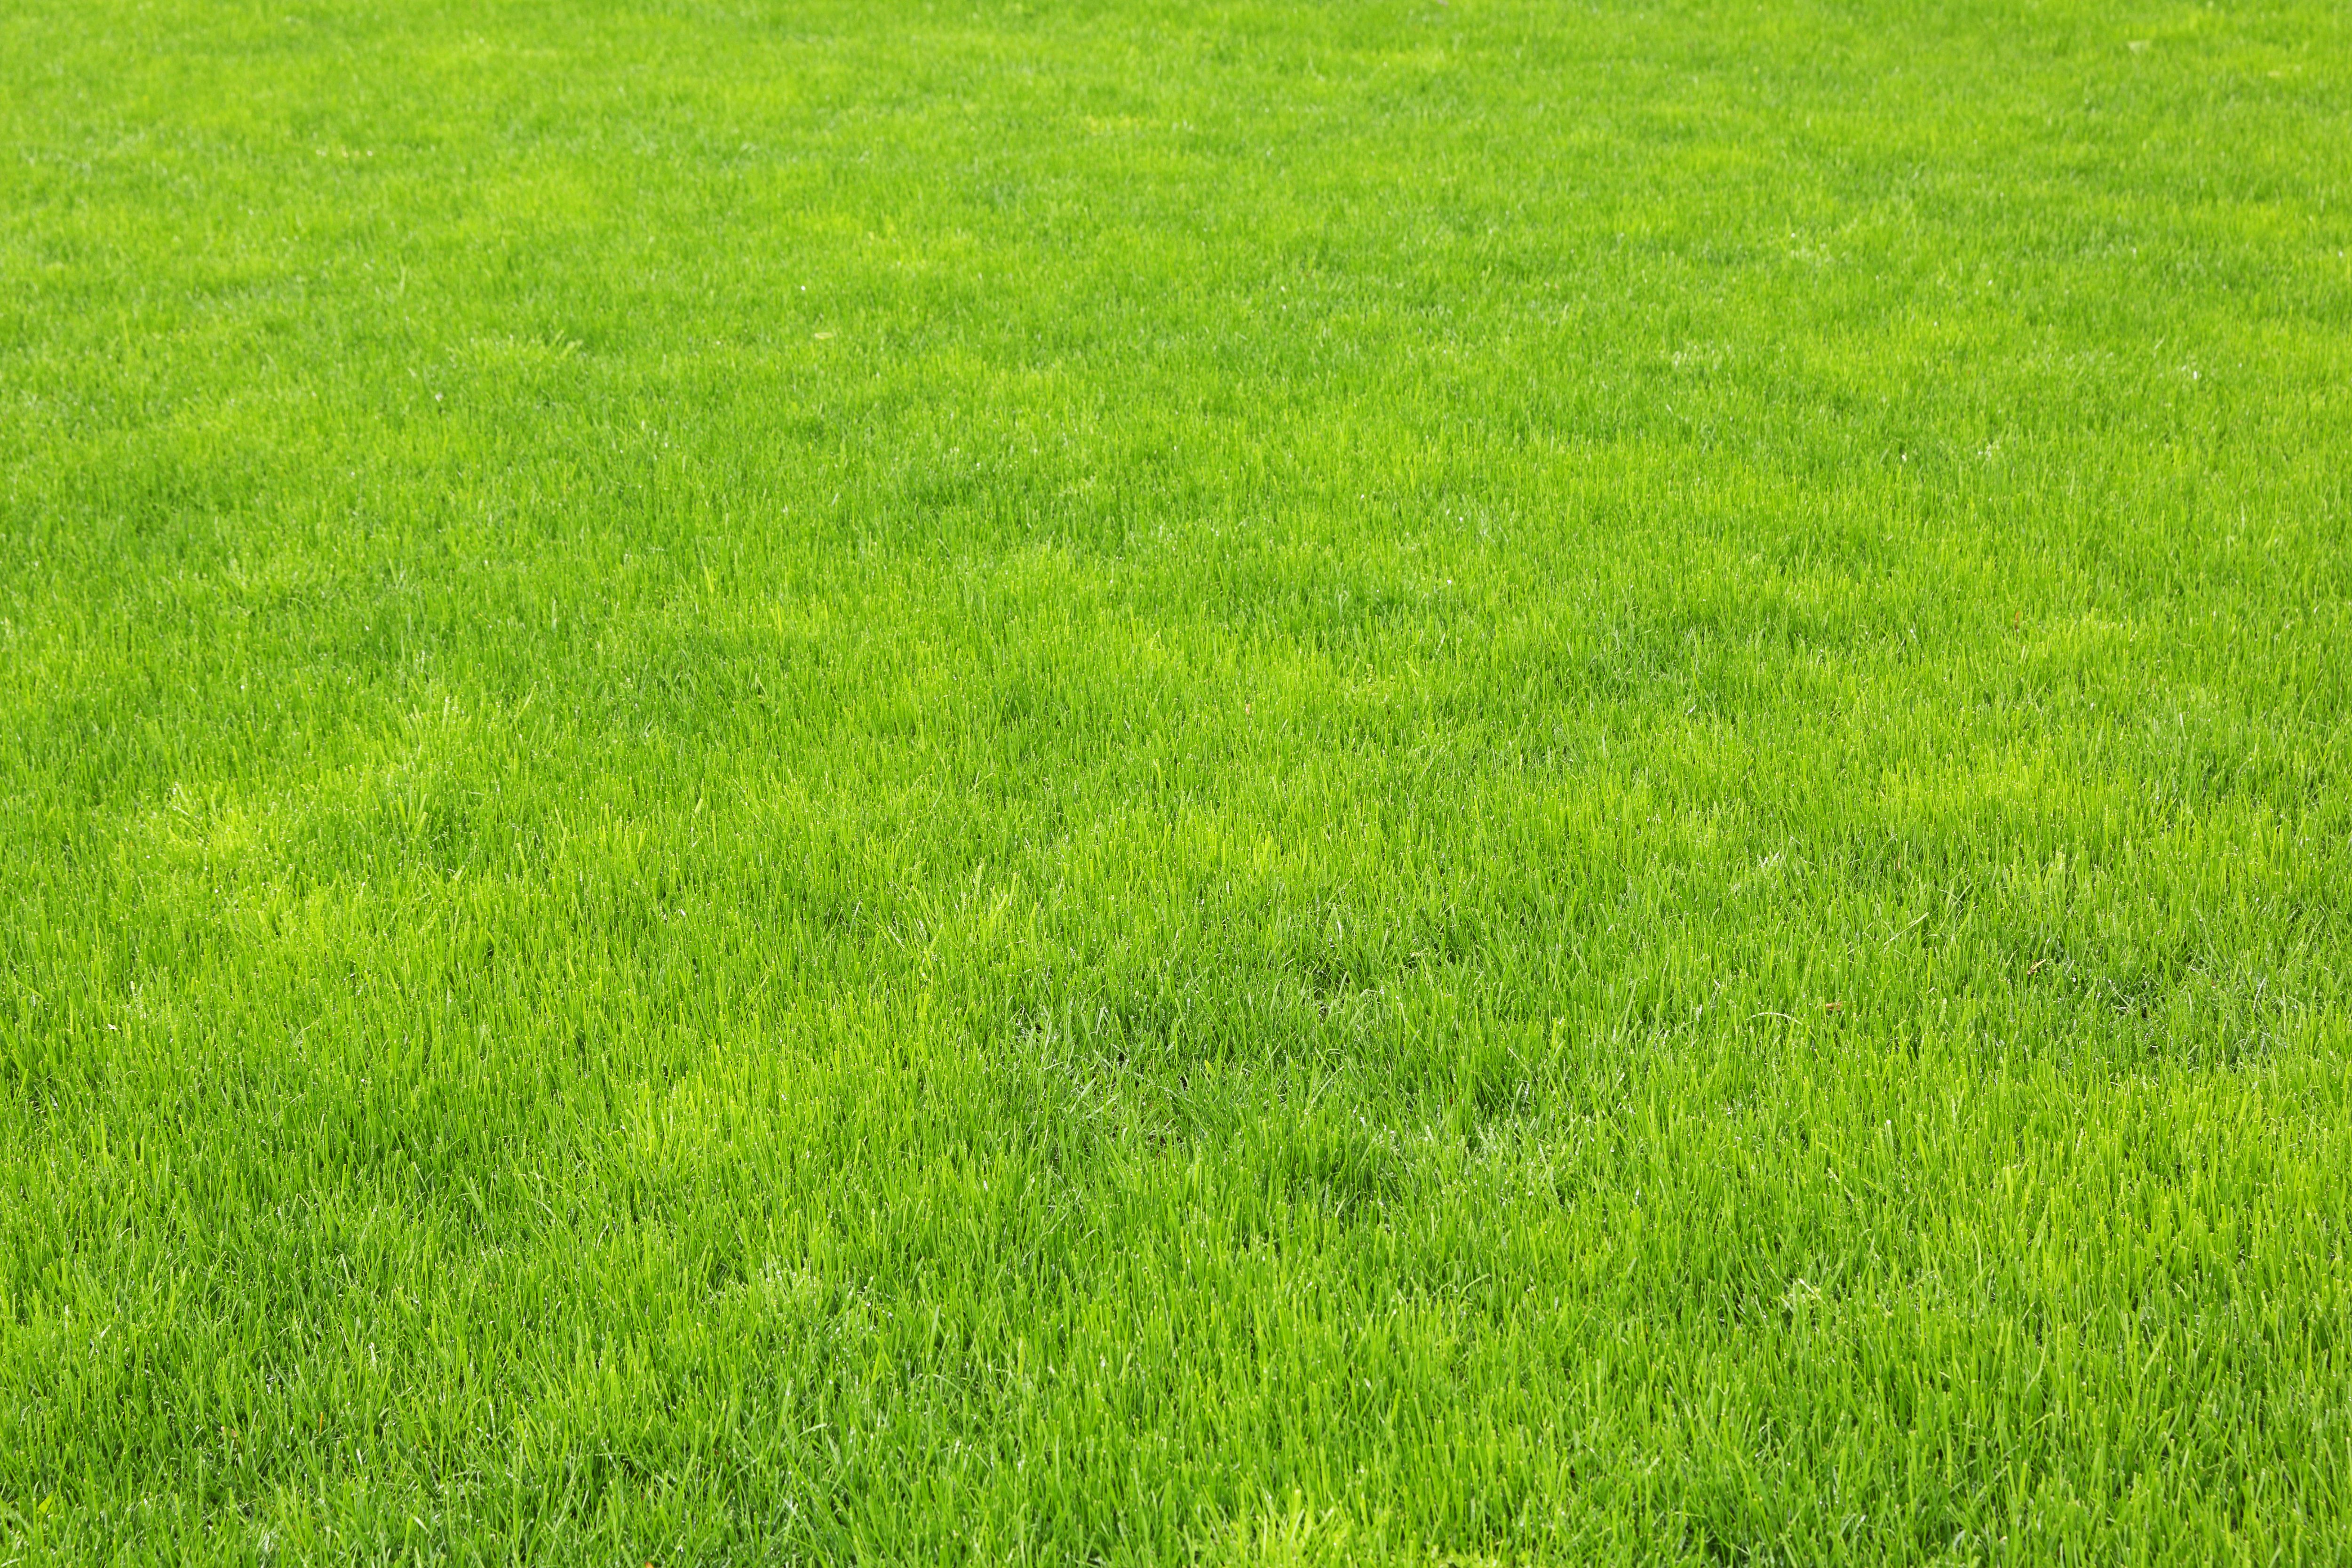 Fall Lawn Feeding - Why Fertilize Your Lawn in the Fall? - Koopman Blog